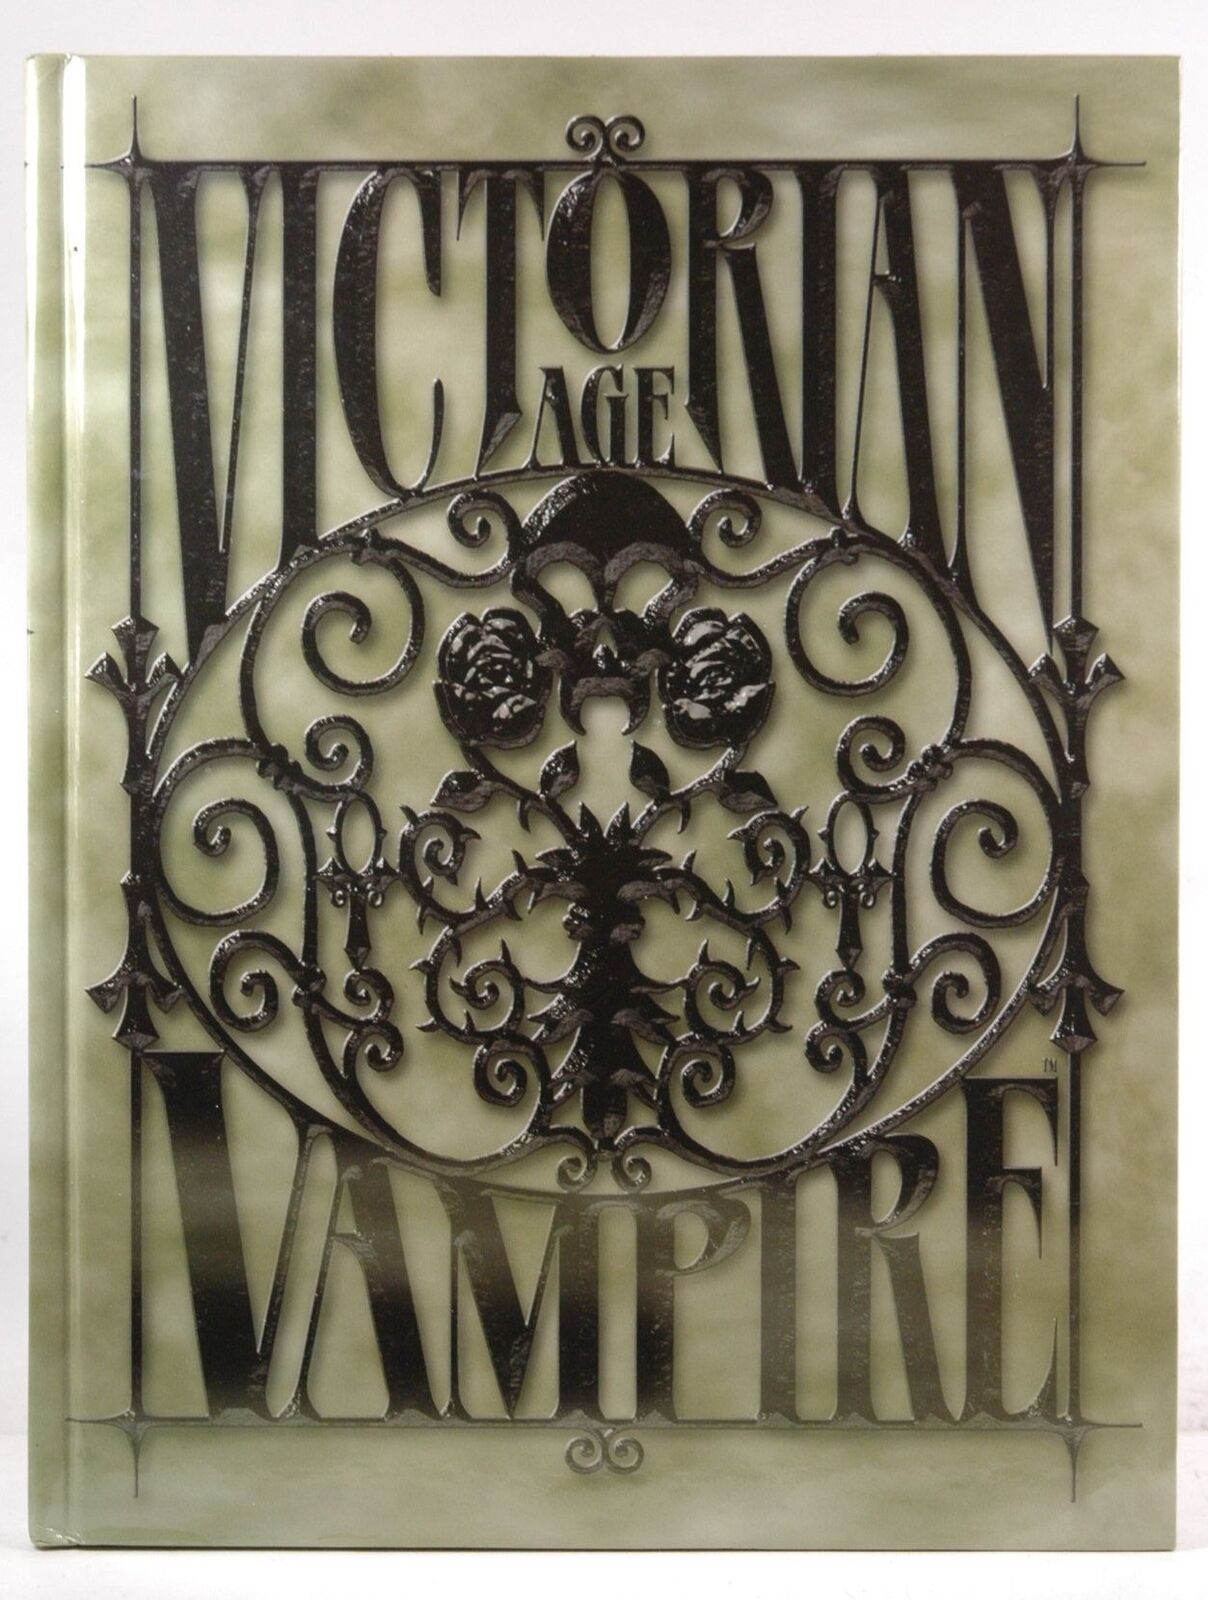 Victorian Age: Vampire Justin Achilli, Kraig Blackwelder, Brian Campbell, Will H